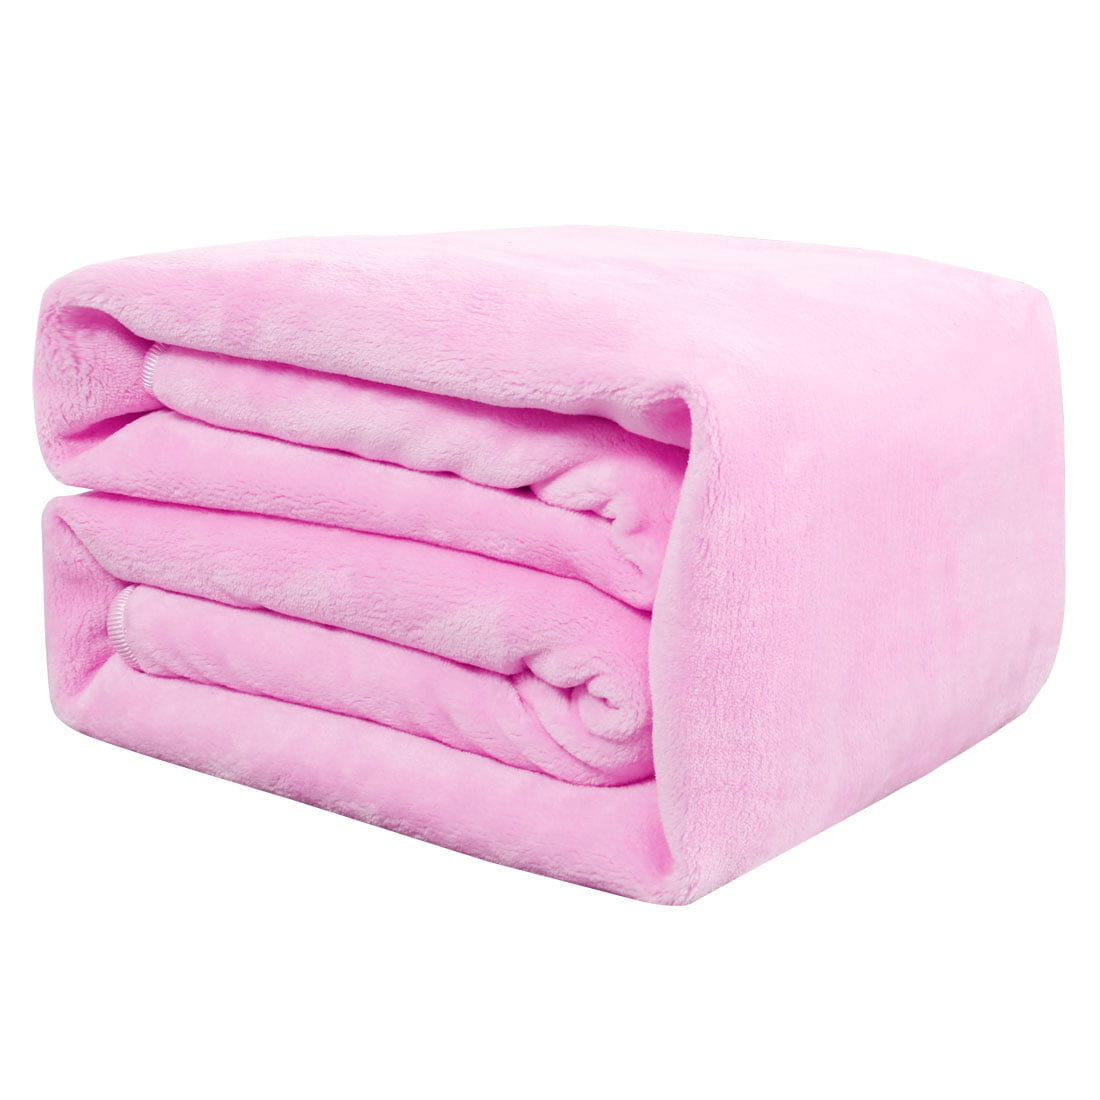 Home Plush Super Soft Warm Flannel Blanket Throw Pink 47 X 78 Inch